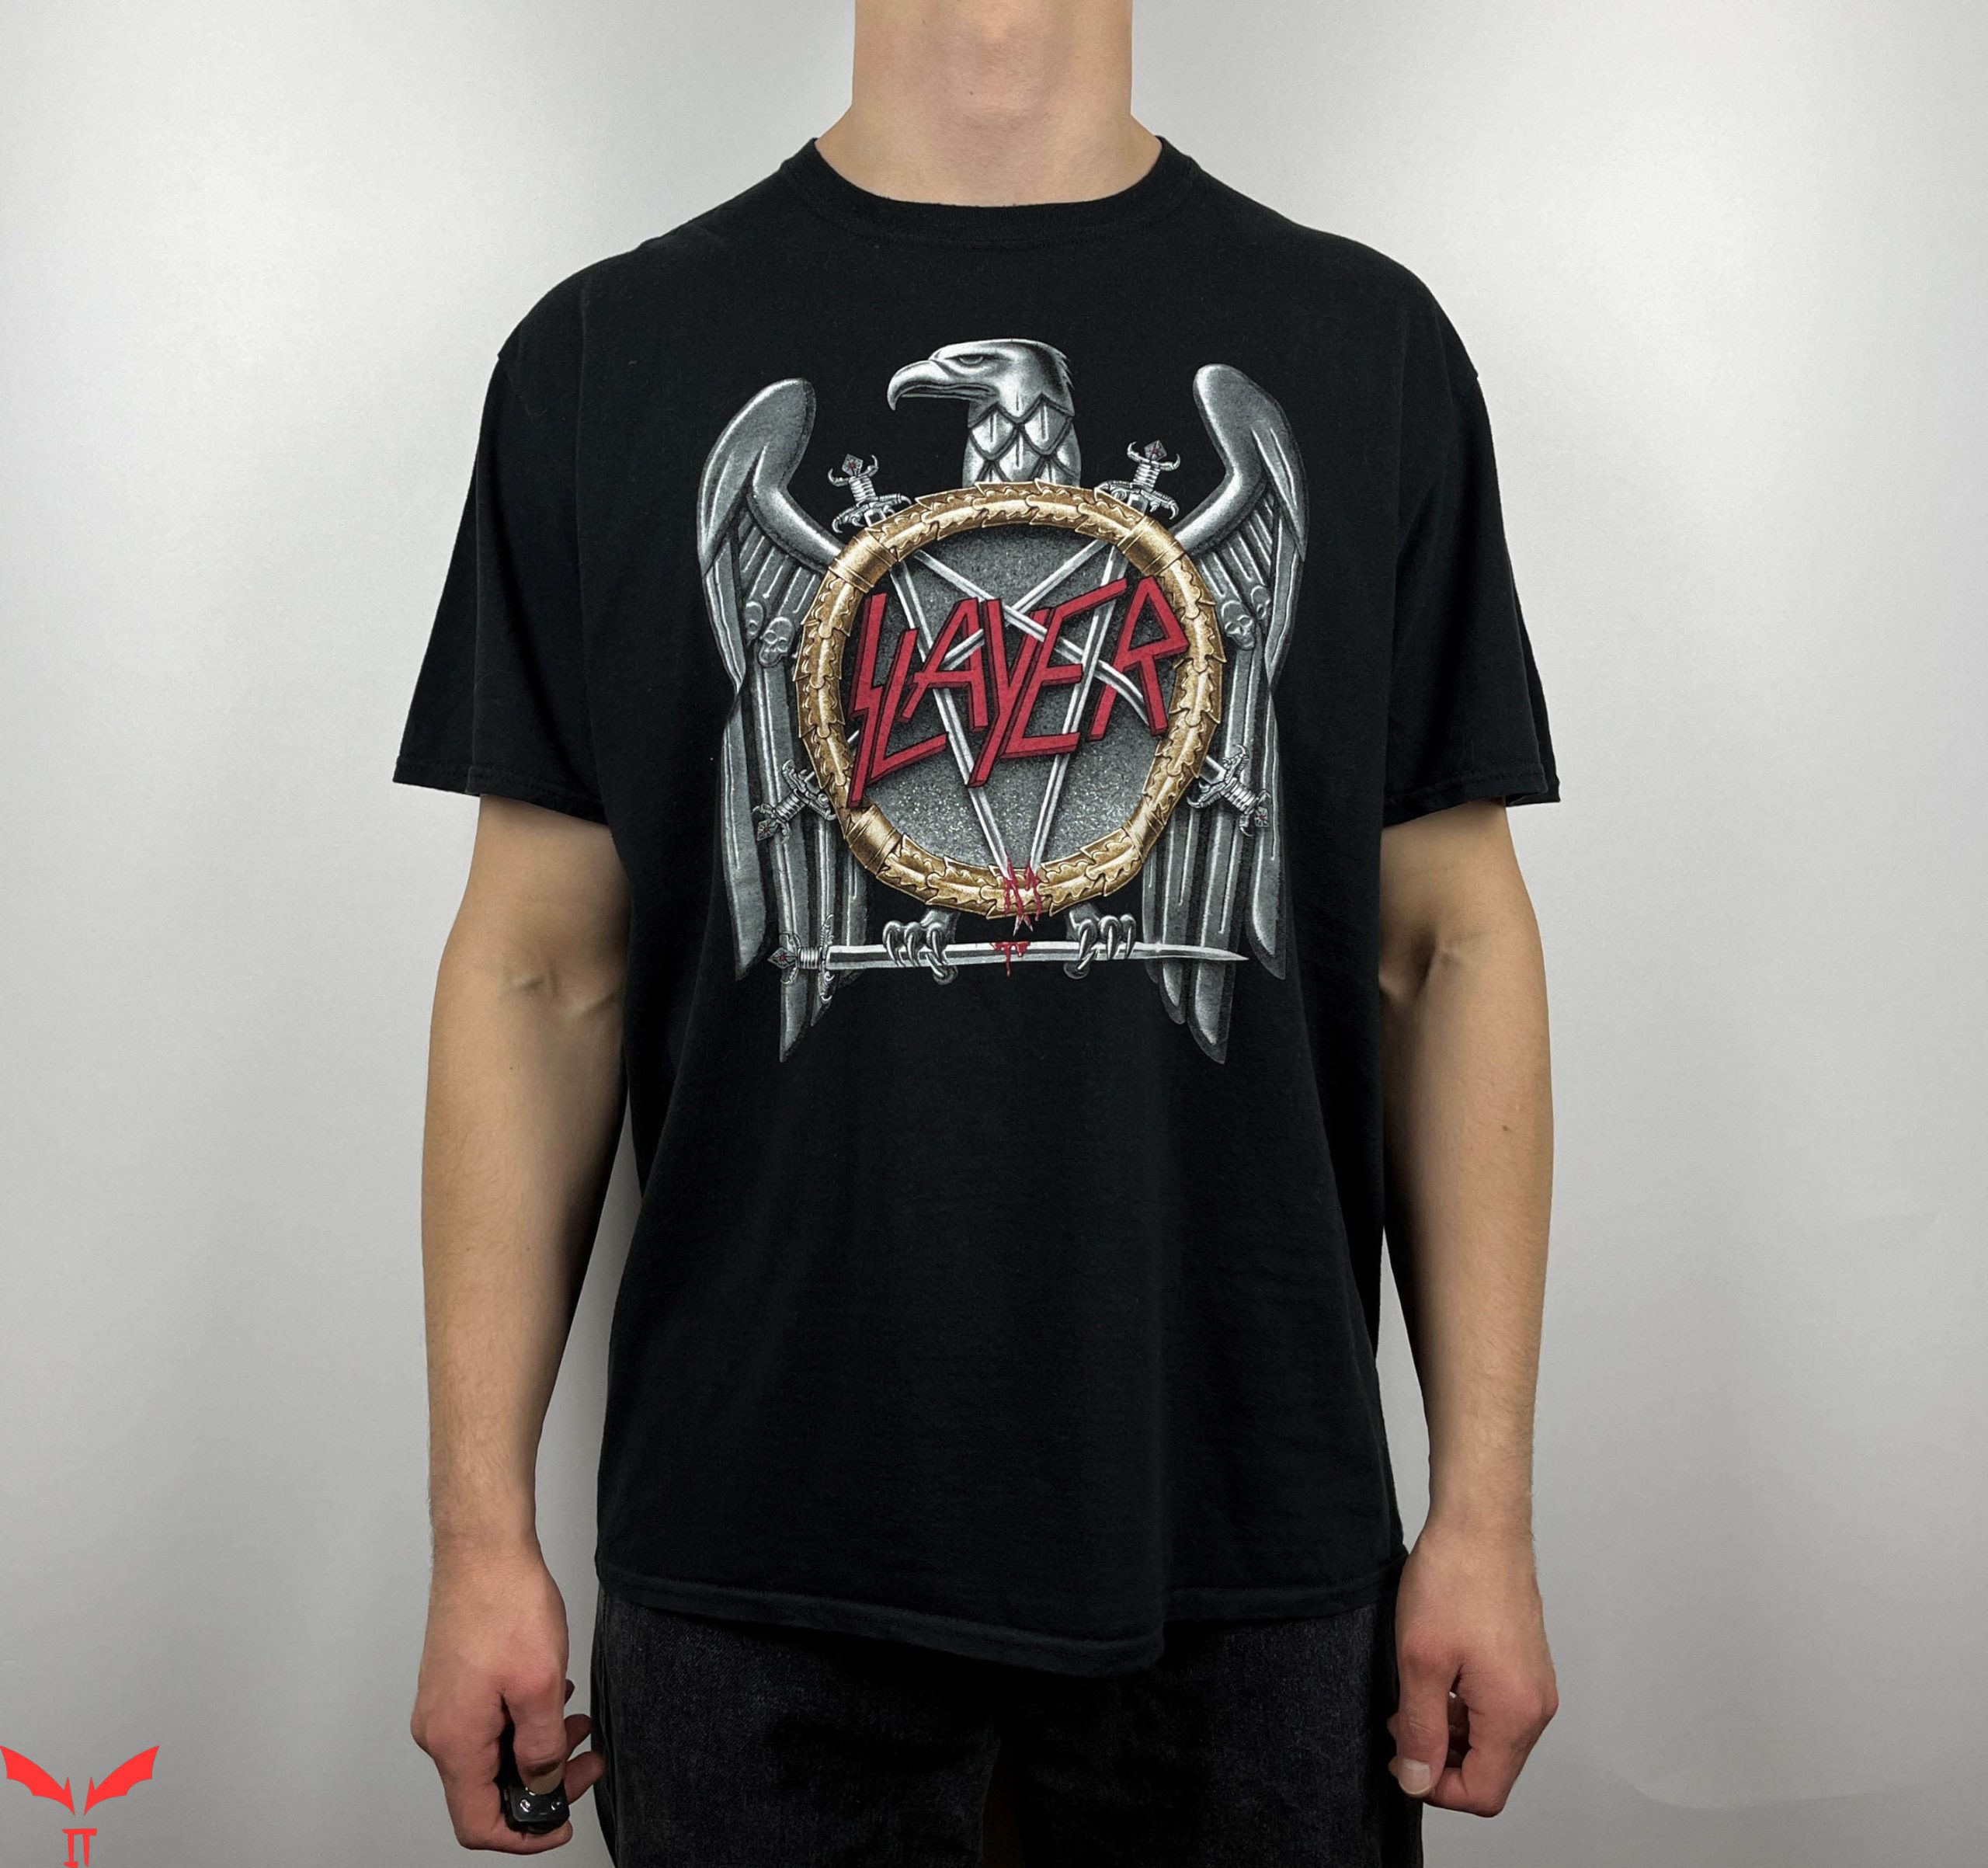 Vintage Slayer T-Shirt 2009 Retro Rock Style Tee Shirt